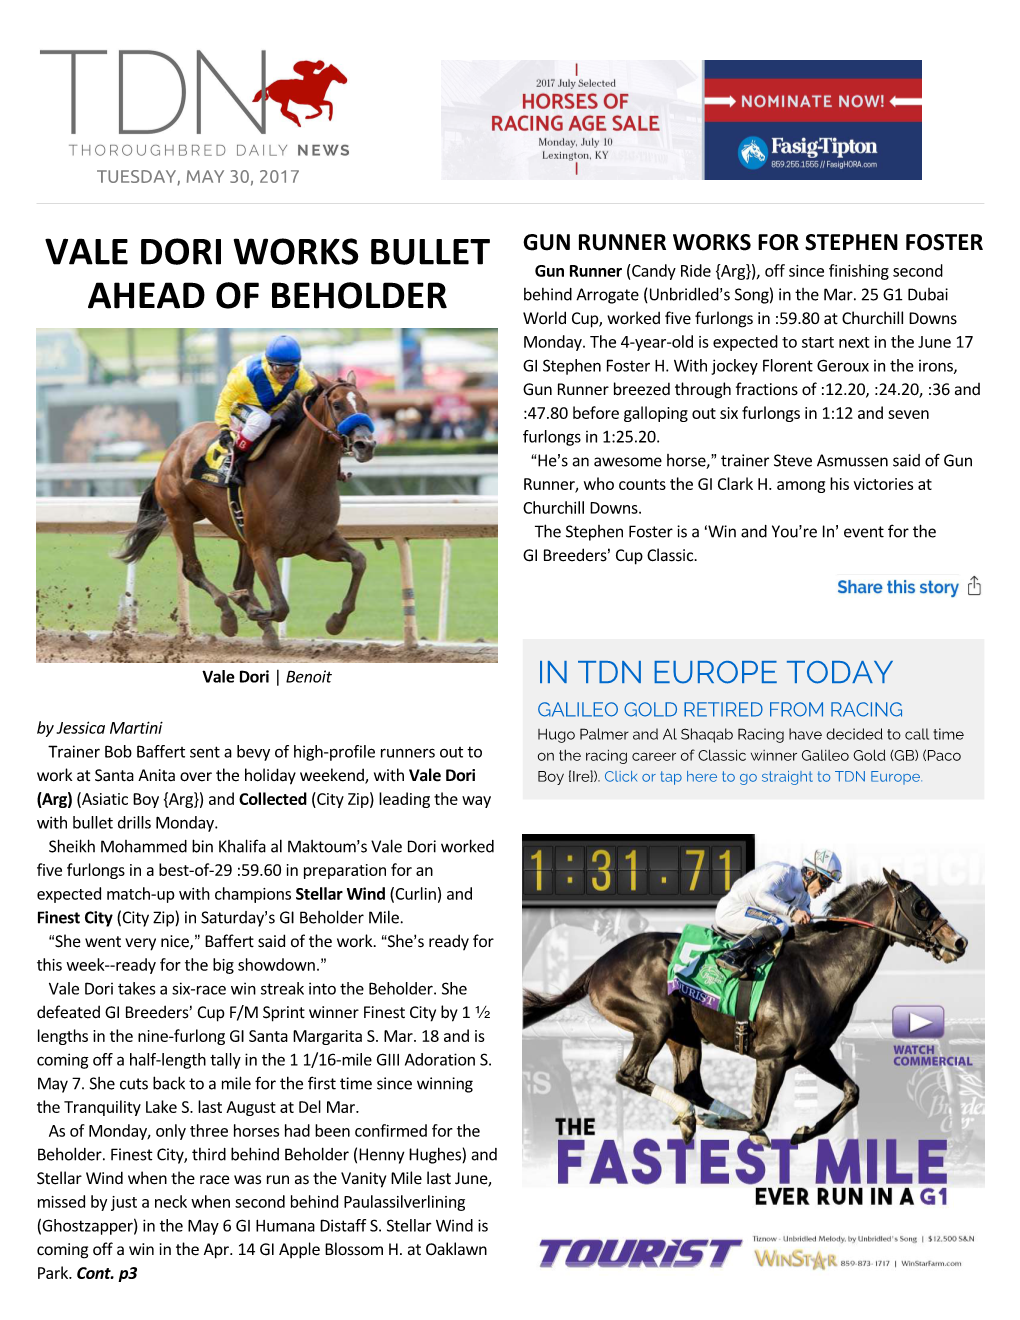 Vale Dori Works Bullet Ahead of Beholder